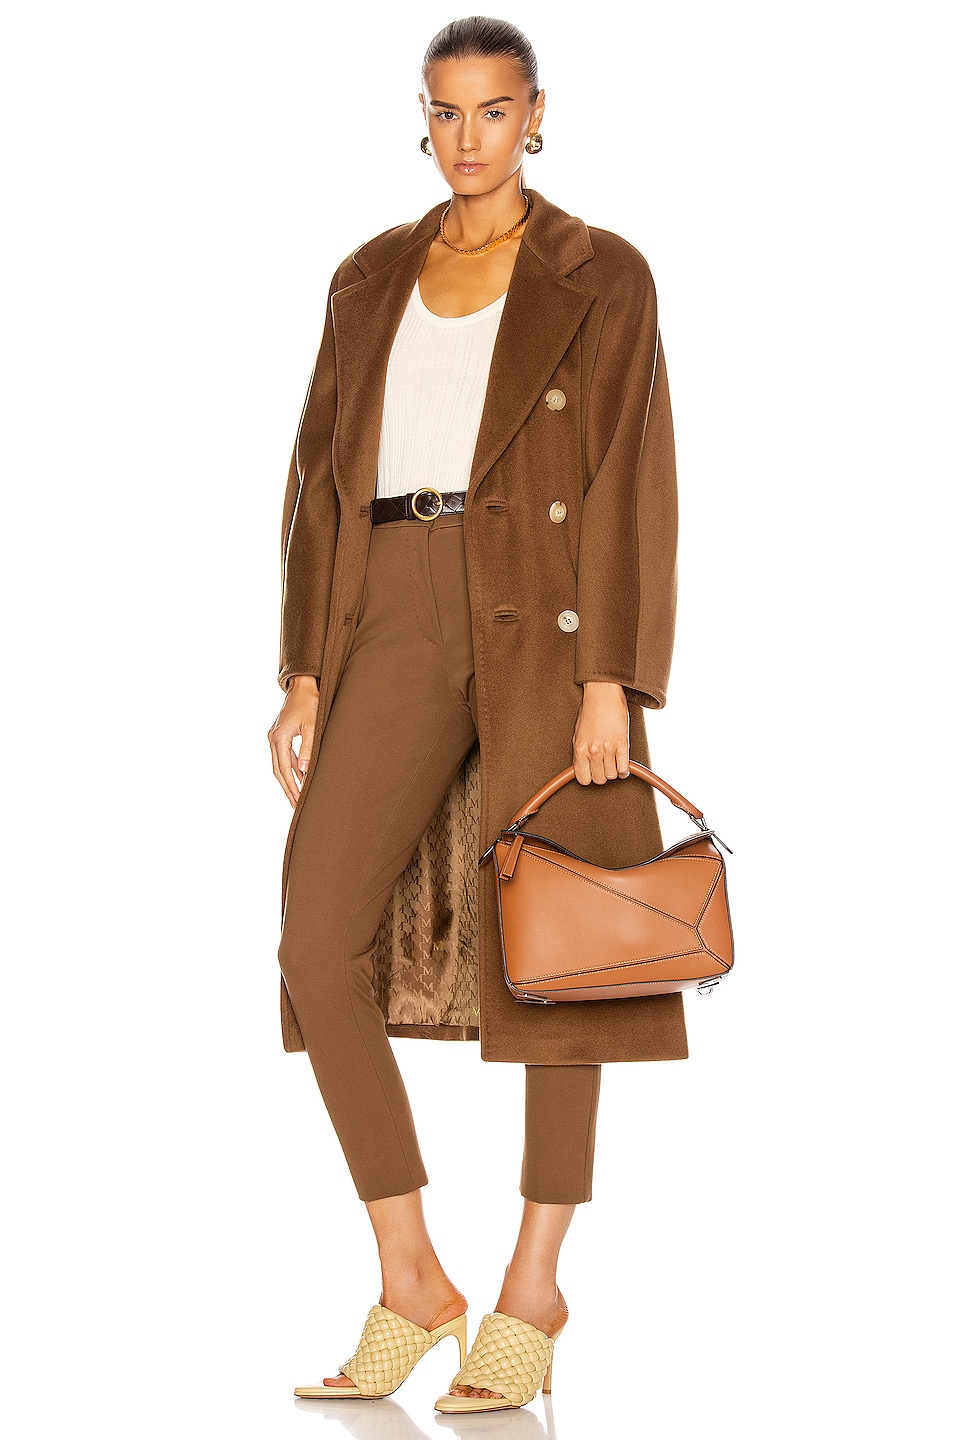 2 Stores In Stock: LOEWE Puzzle Medium Leather Shoulder Bag, Tan | ModeSens